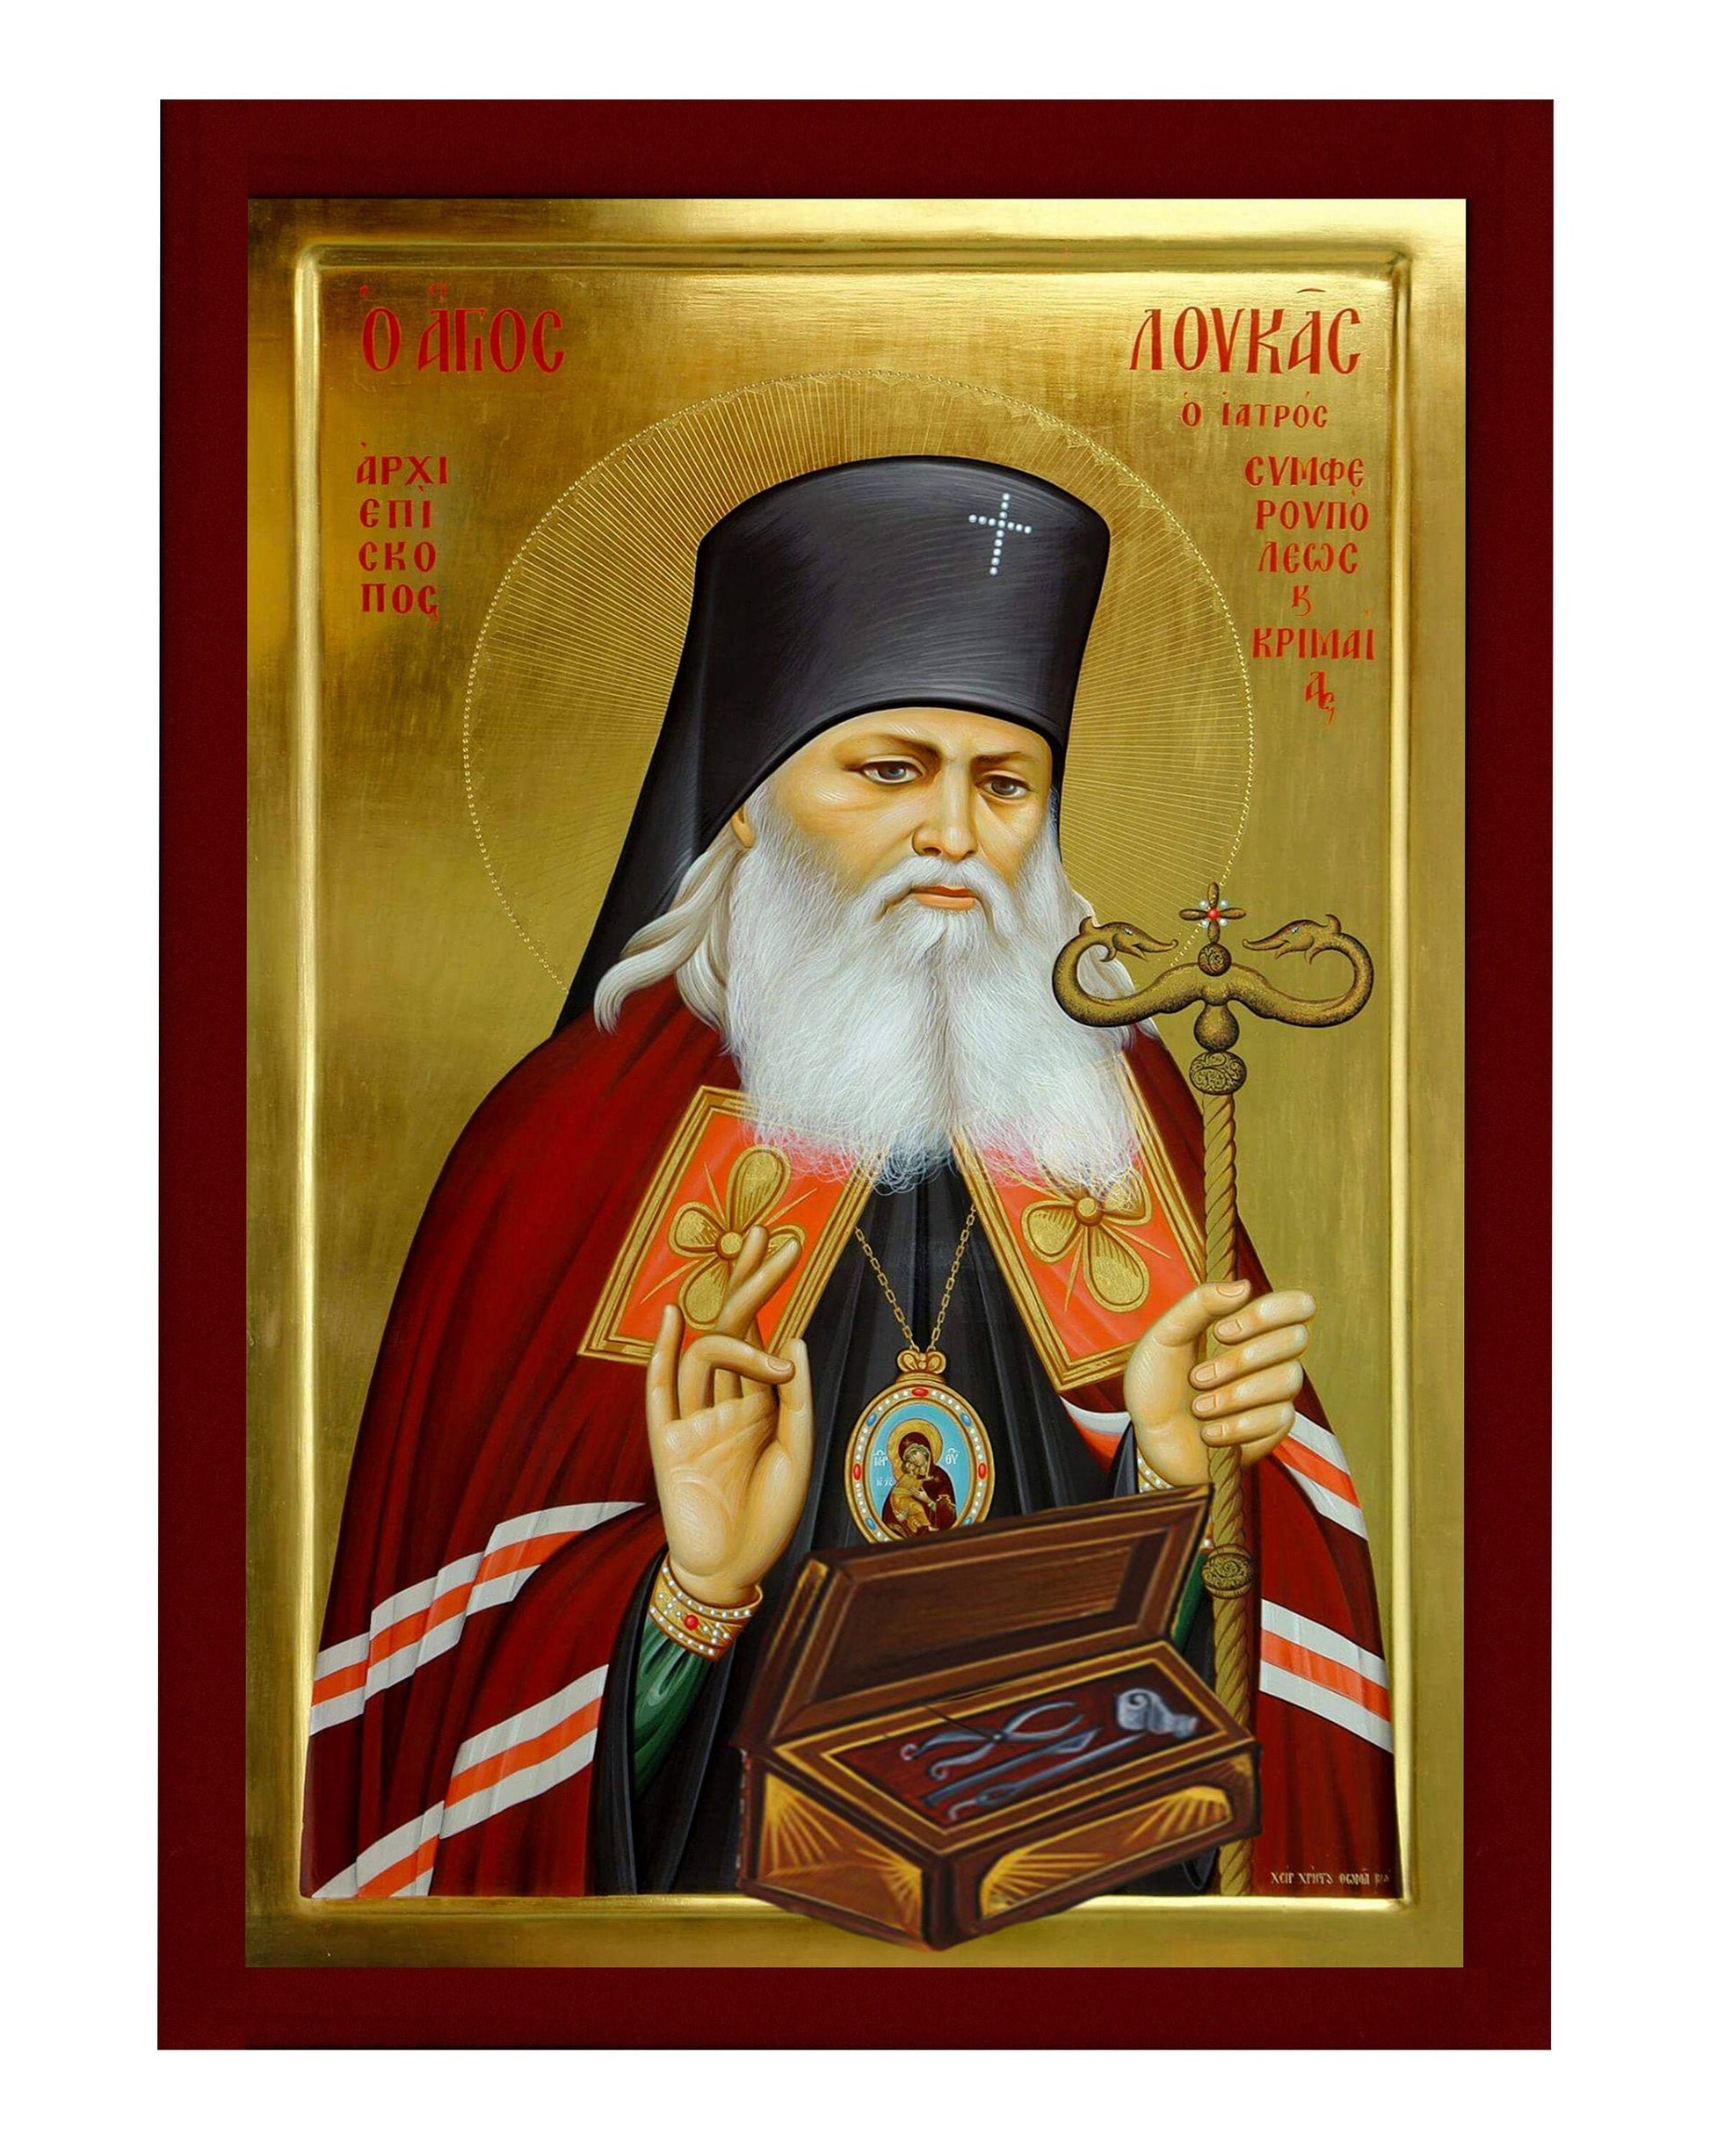 Saint Luke icon, Handmade Greek Orthodox icon St Lucas of Crimea, Byzantine art wall hanging on wood plaque icon, religious decor TheHolyArt